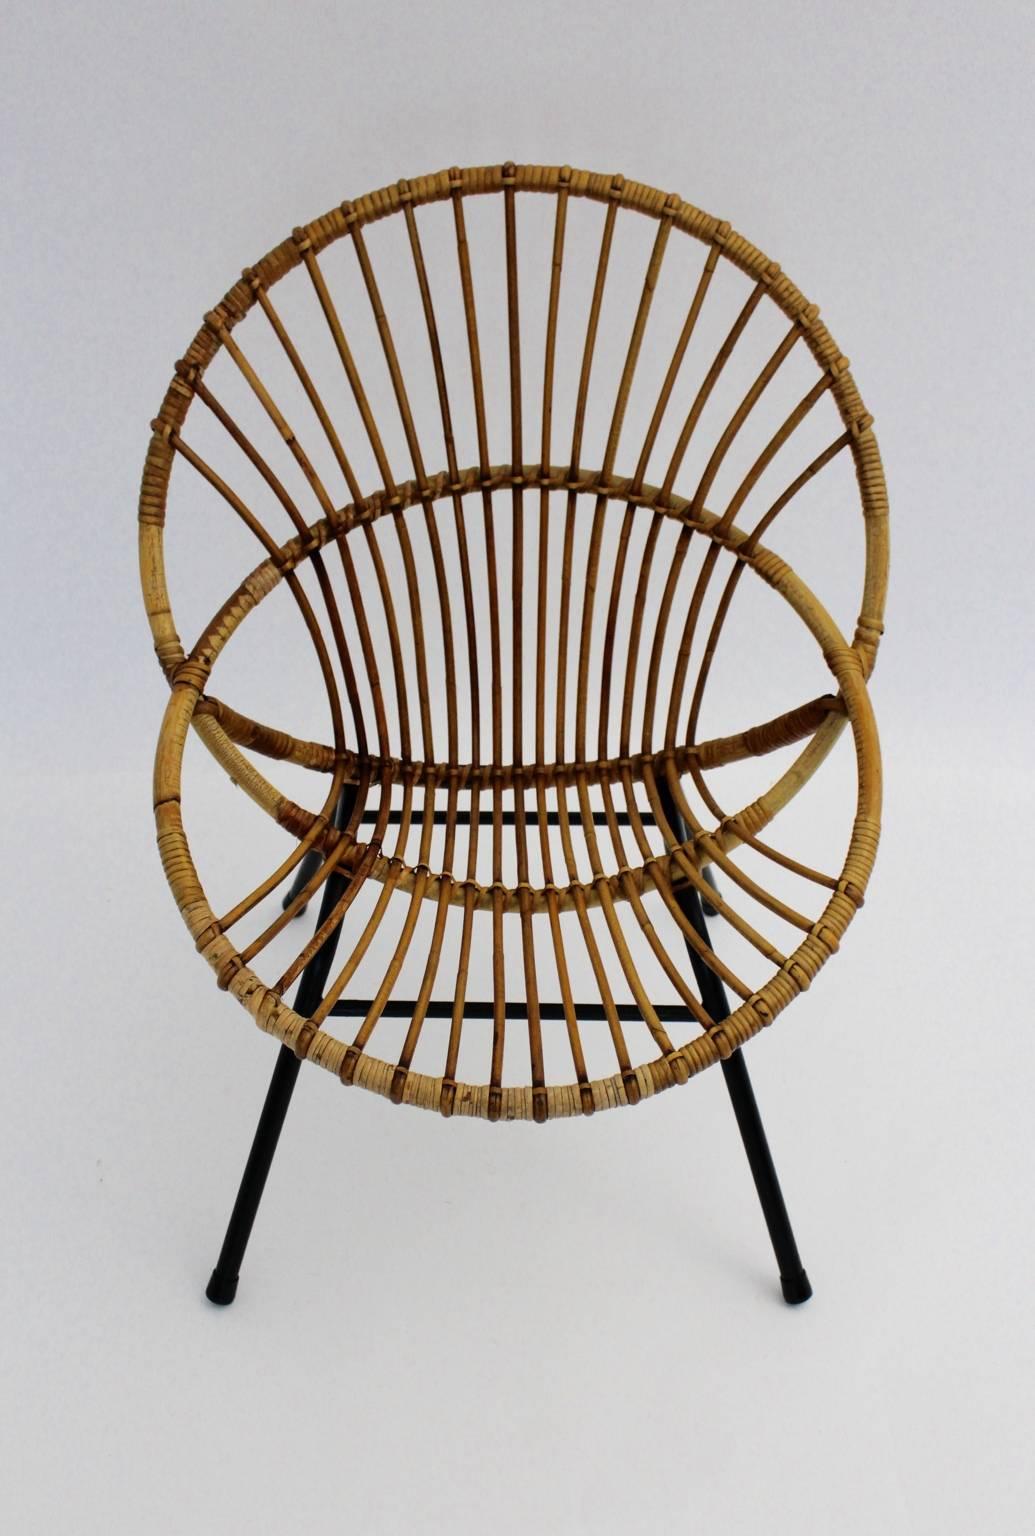 vintage rattan chair -china -b2b -forum -blog -wikipedia -.cn -.gov -alibaba